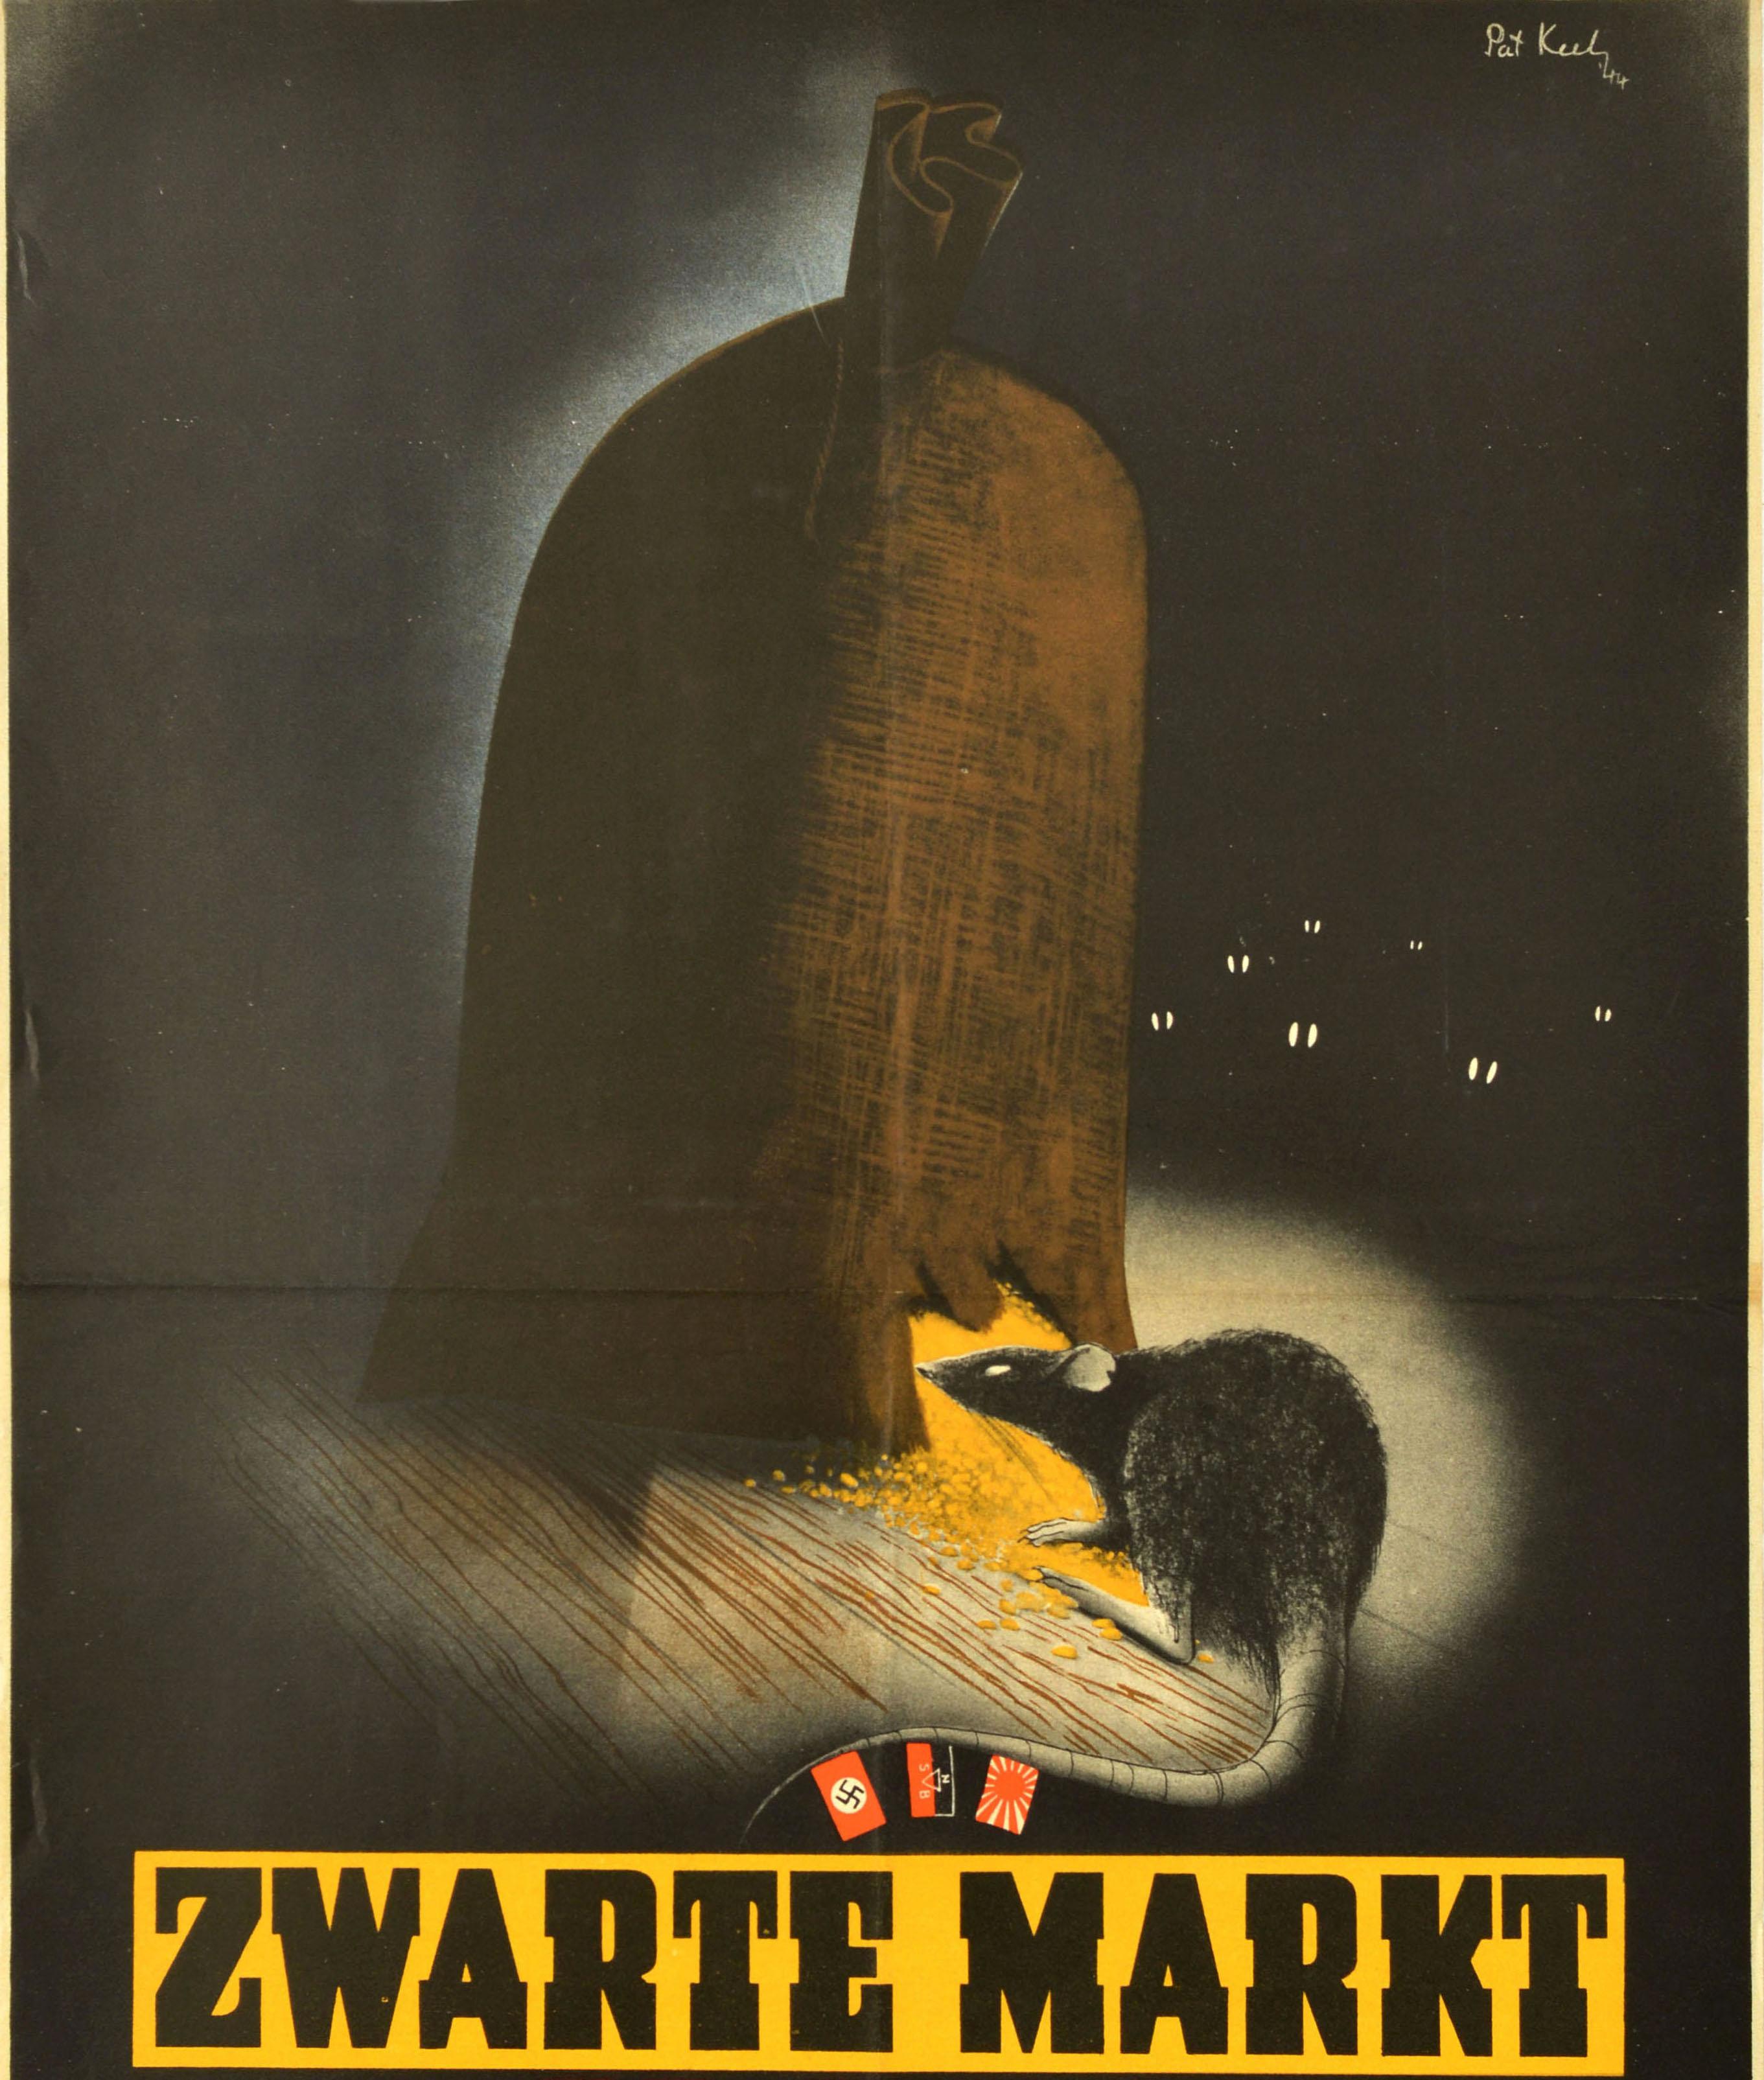 British Original Vintage War Poster Zwarte Markt Black Market Theft WWII Pat Keely Rat For Sale